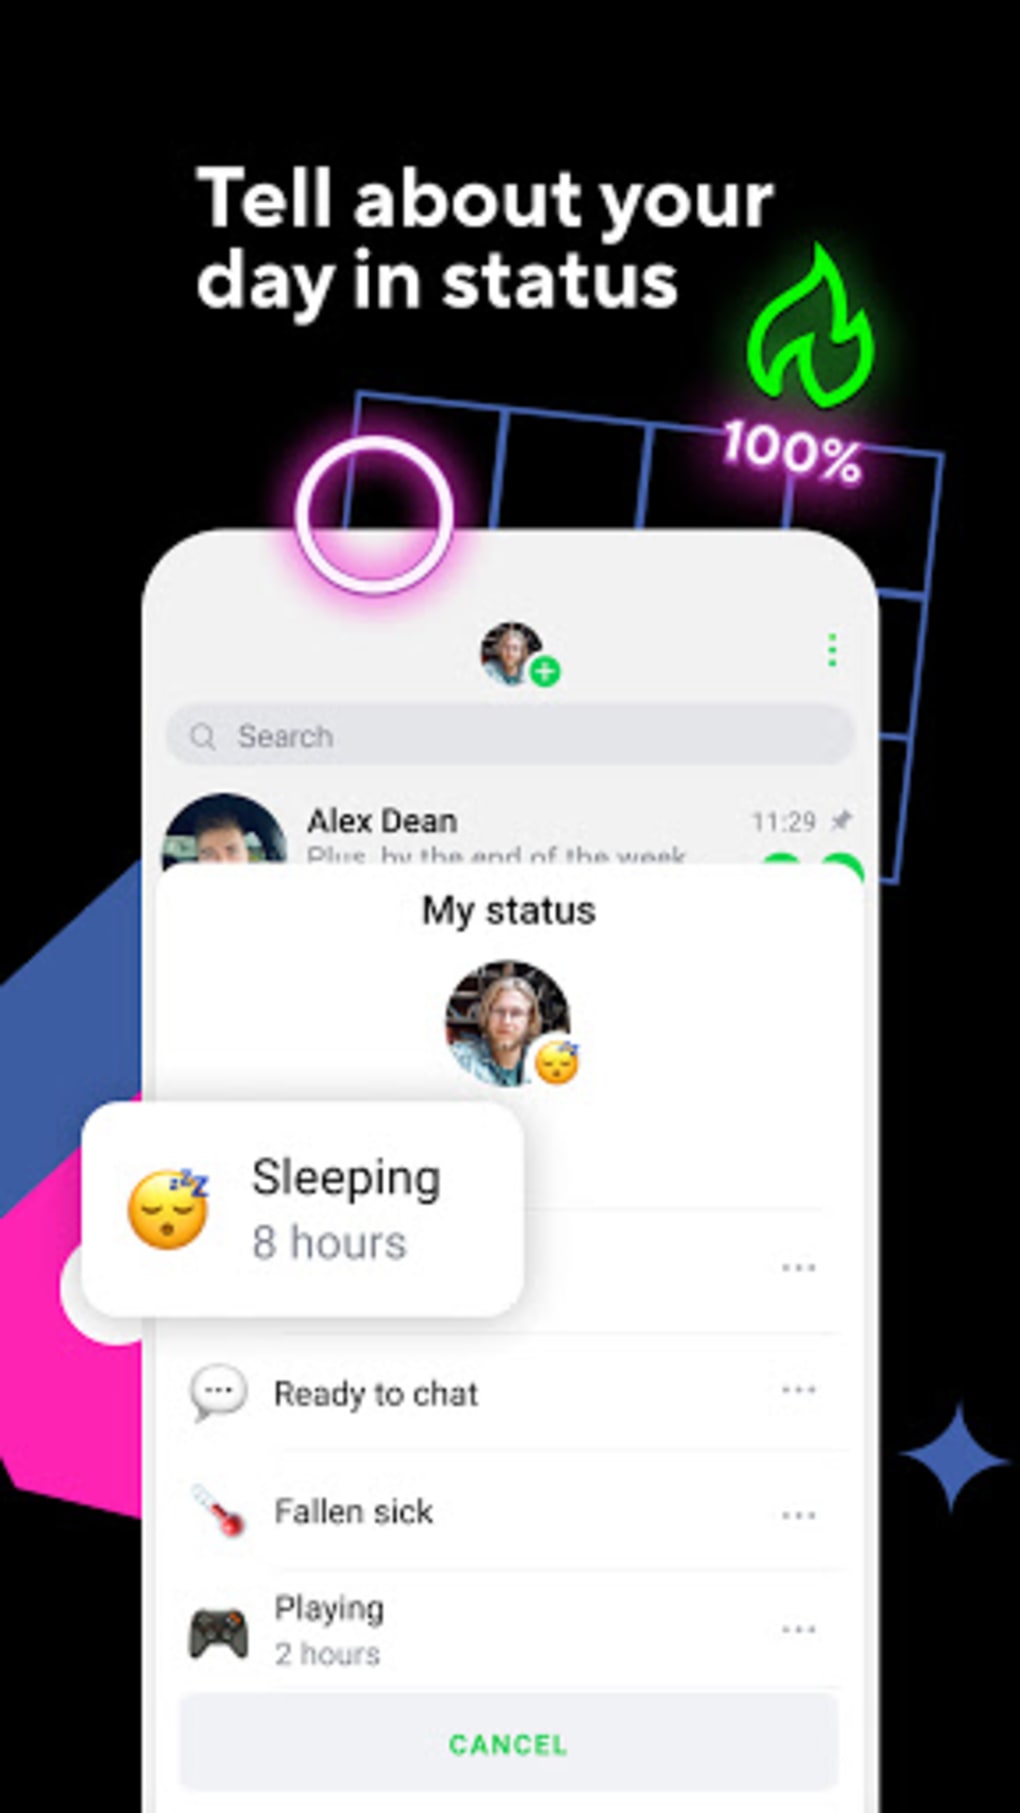 ICQ Messenger Introduces Group Video Calls